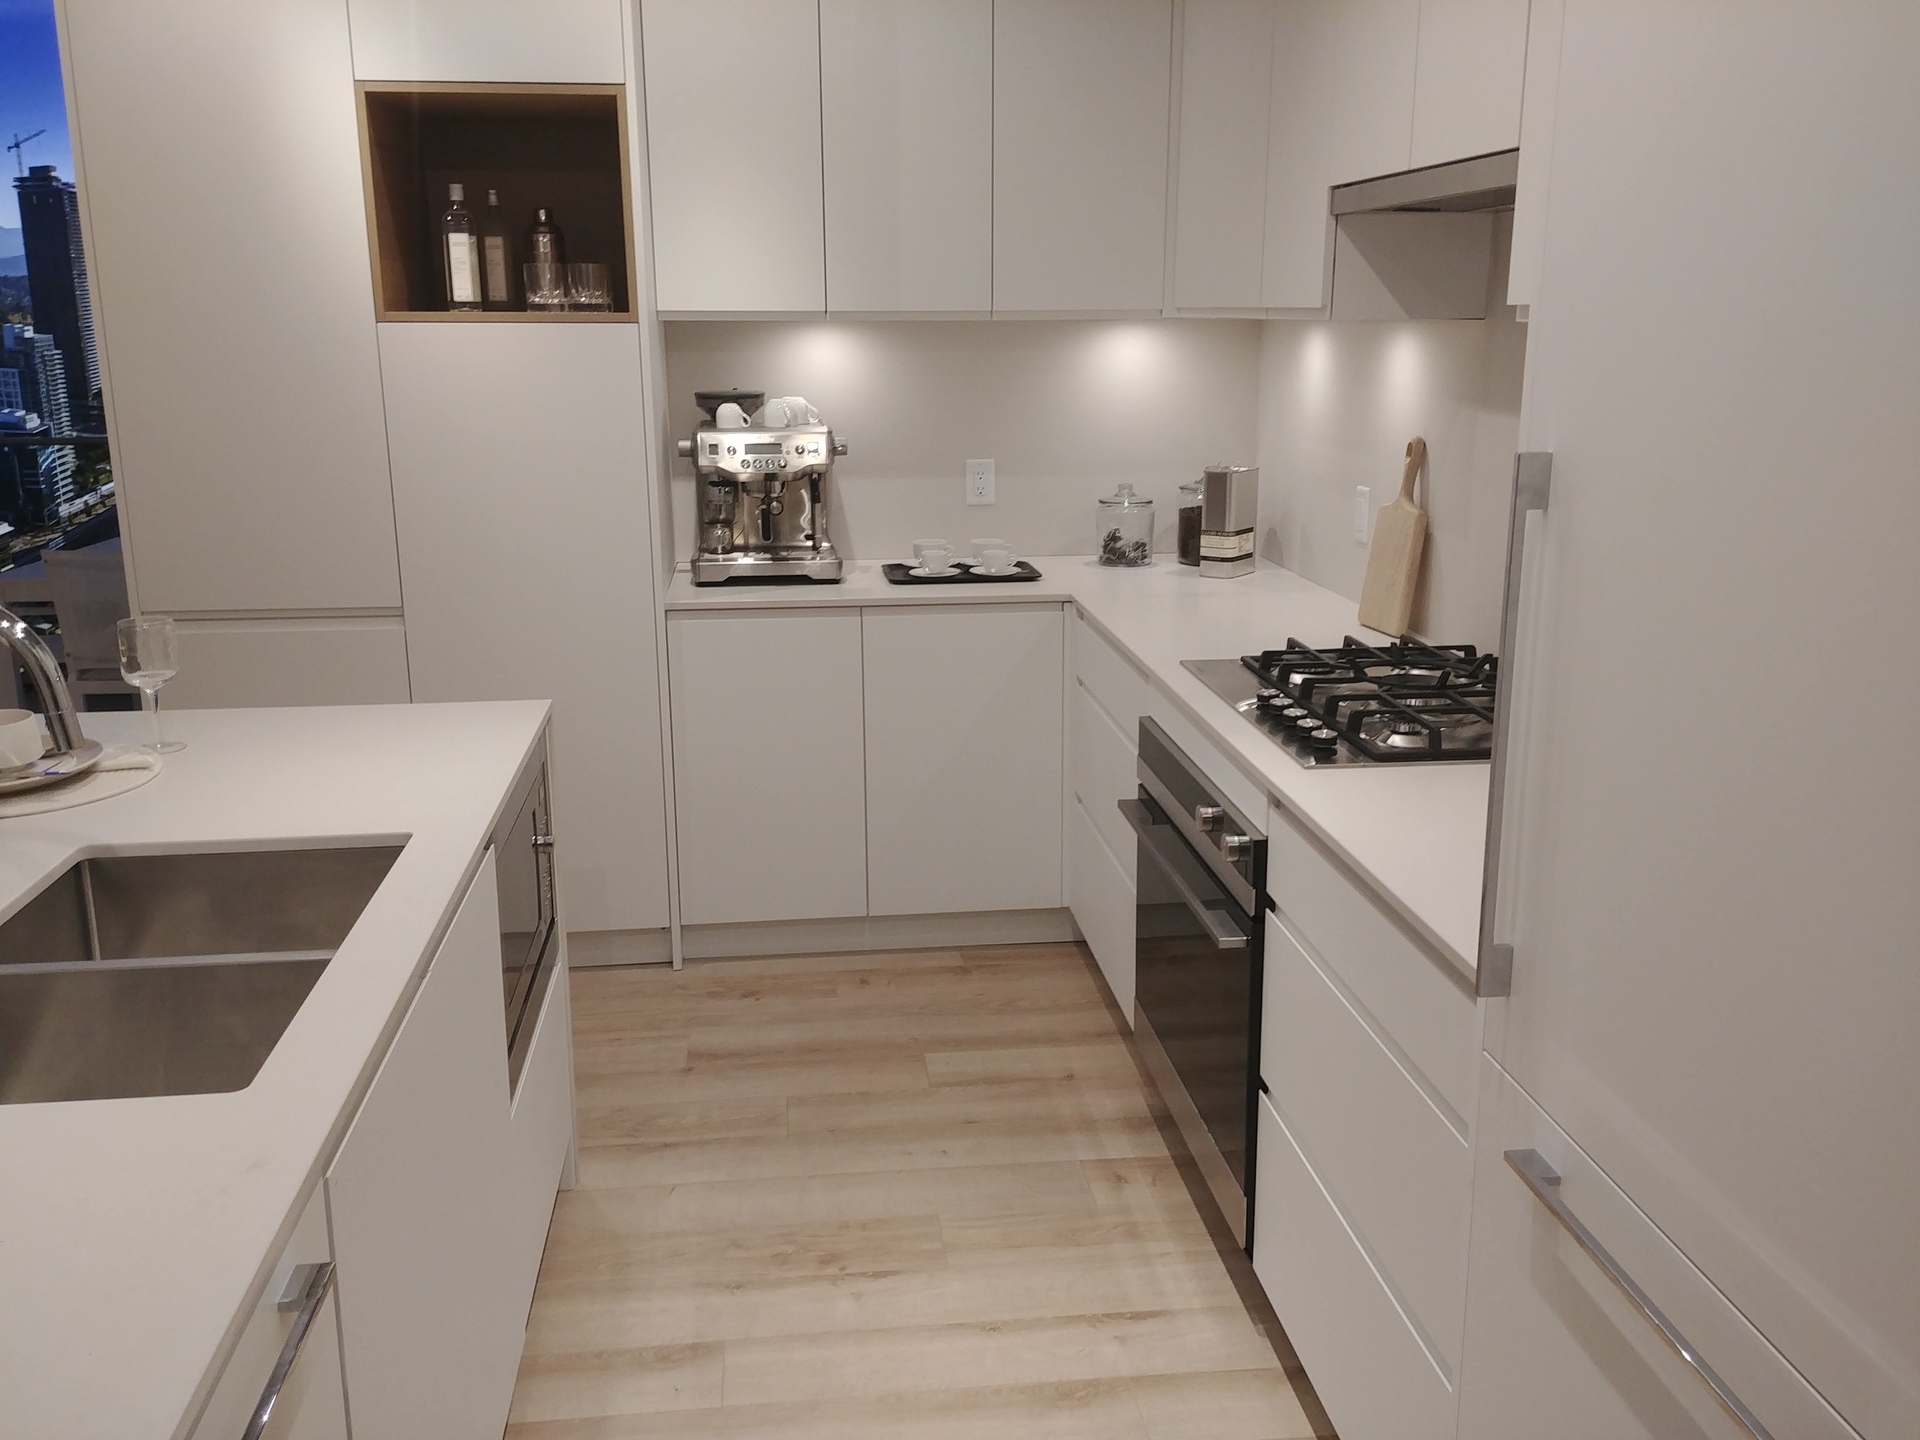 akimbo-2-bed-kitchen-in-light-colour-scheme.jpg